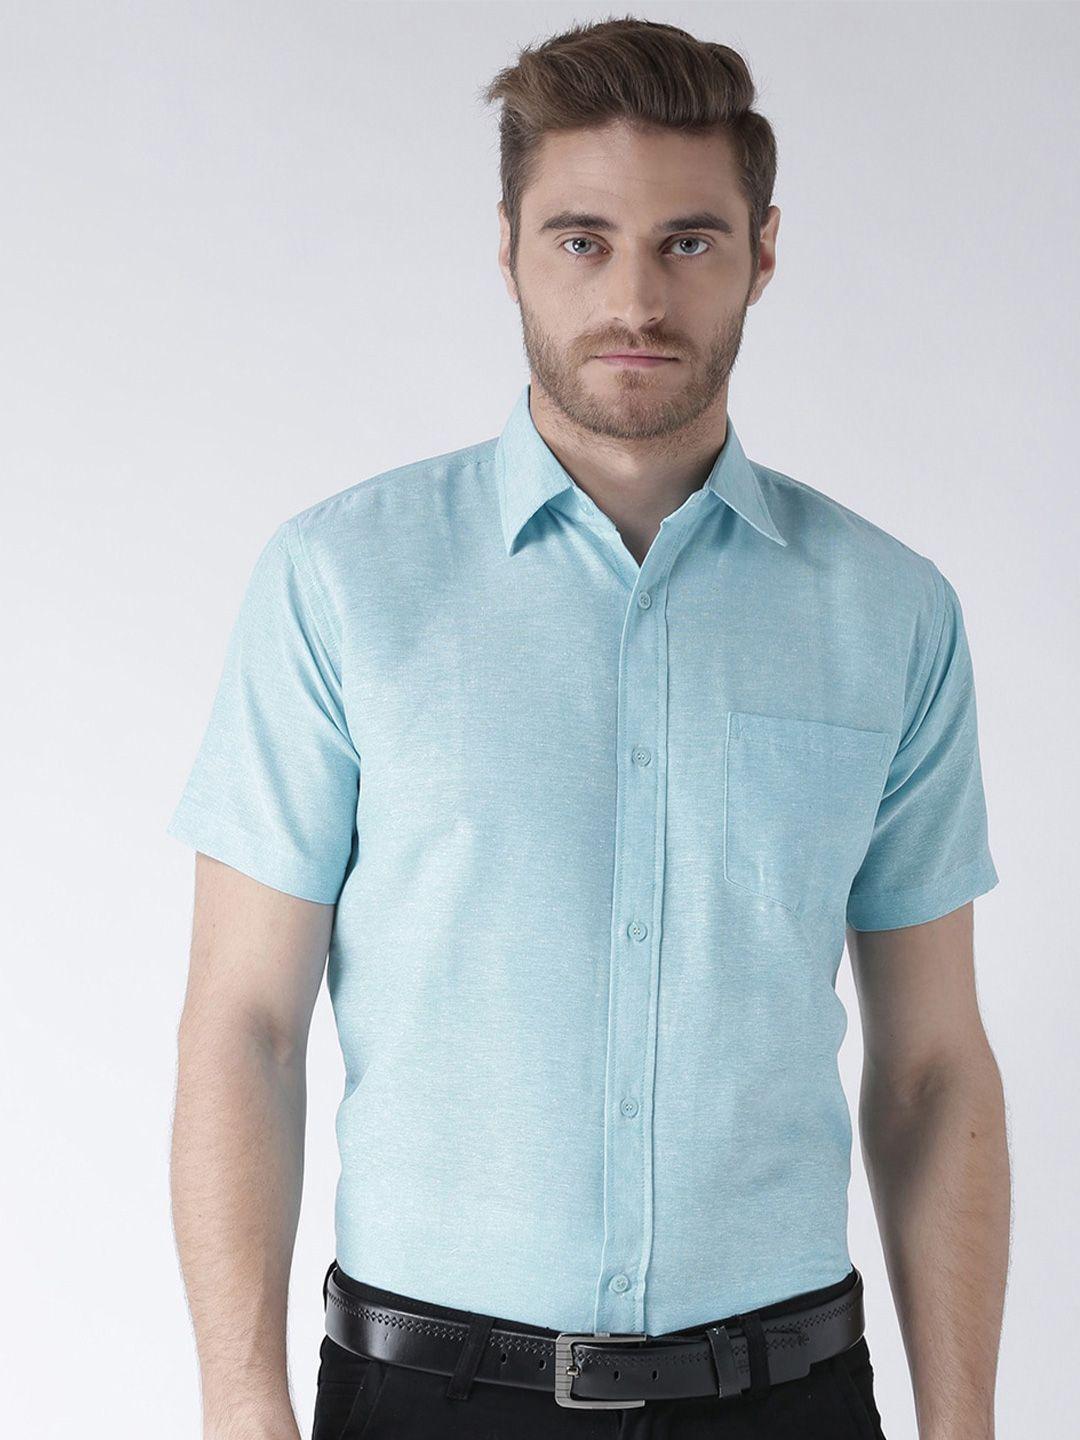 riag short sleeves patch pocket formal cotton shirt